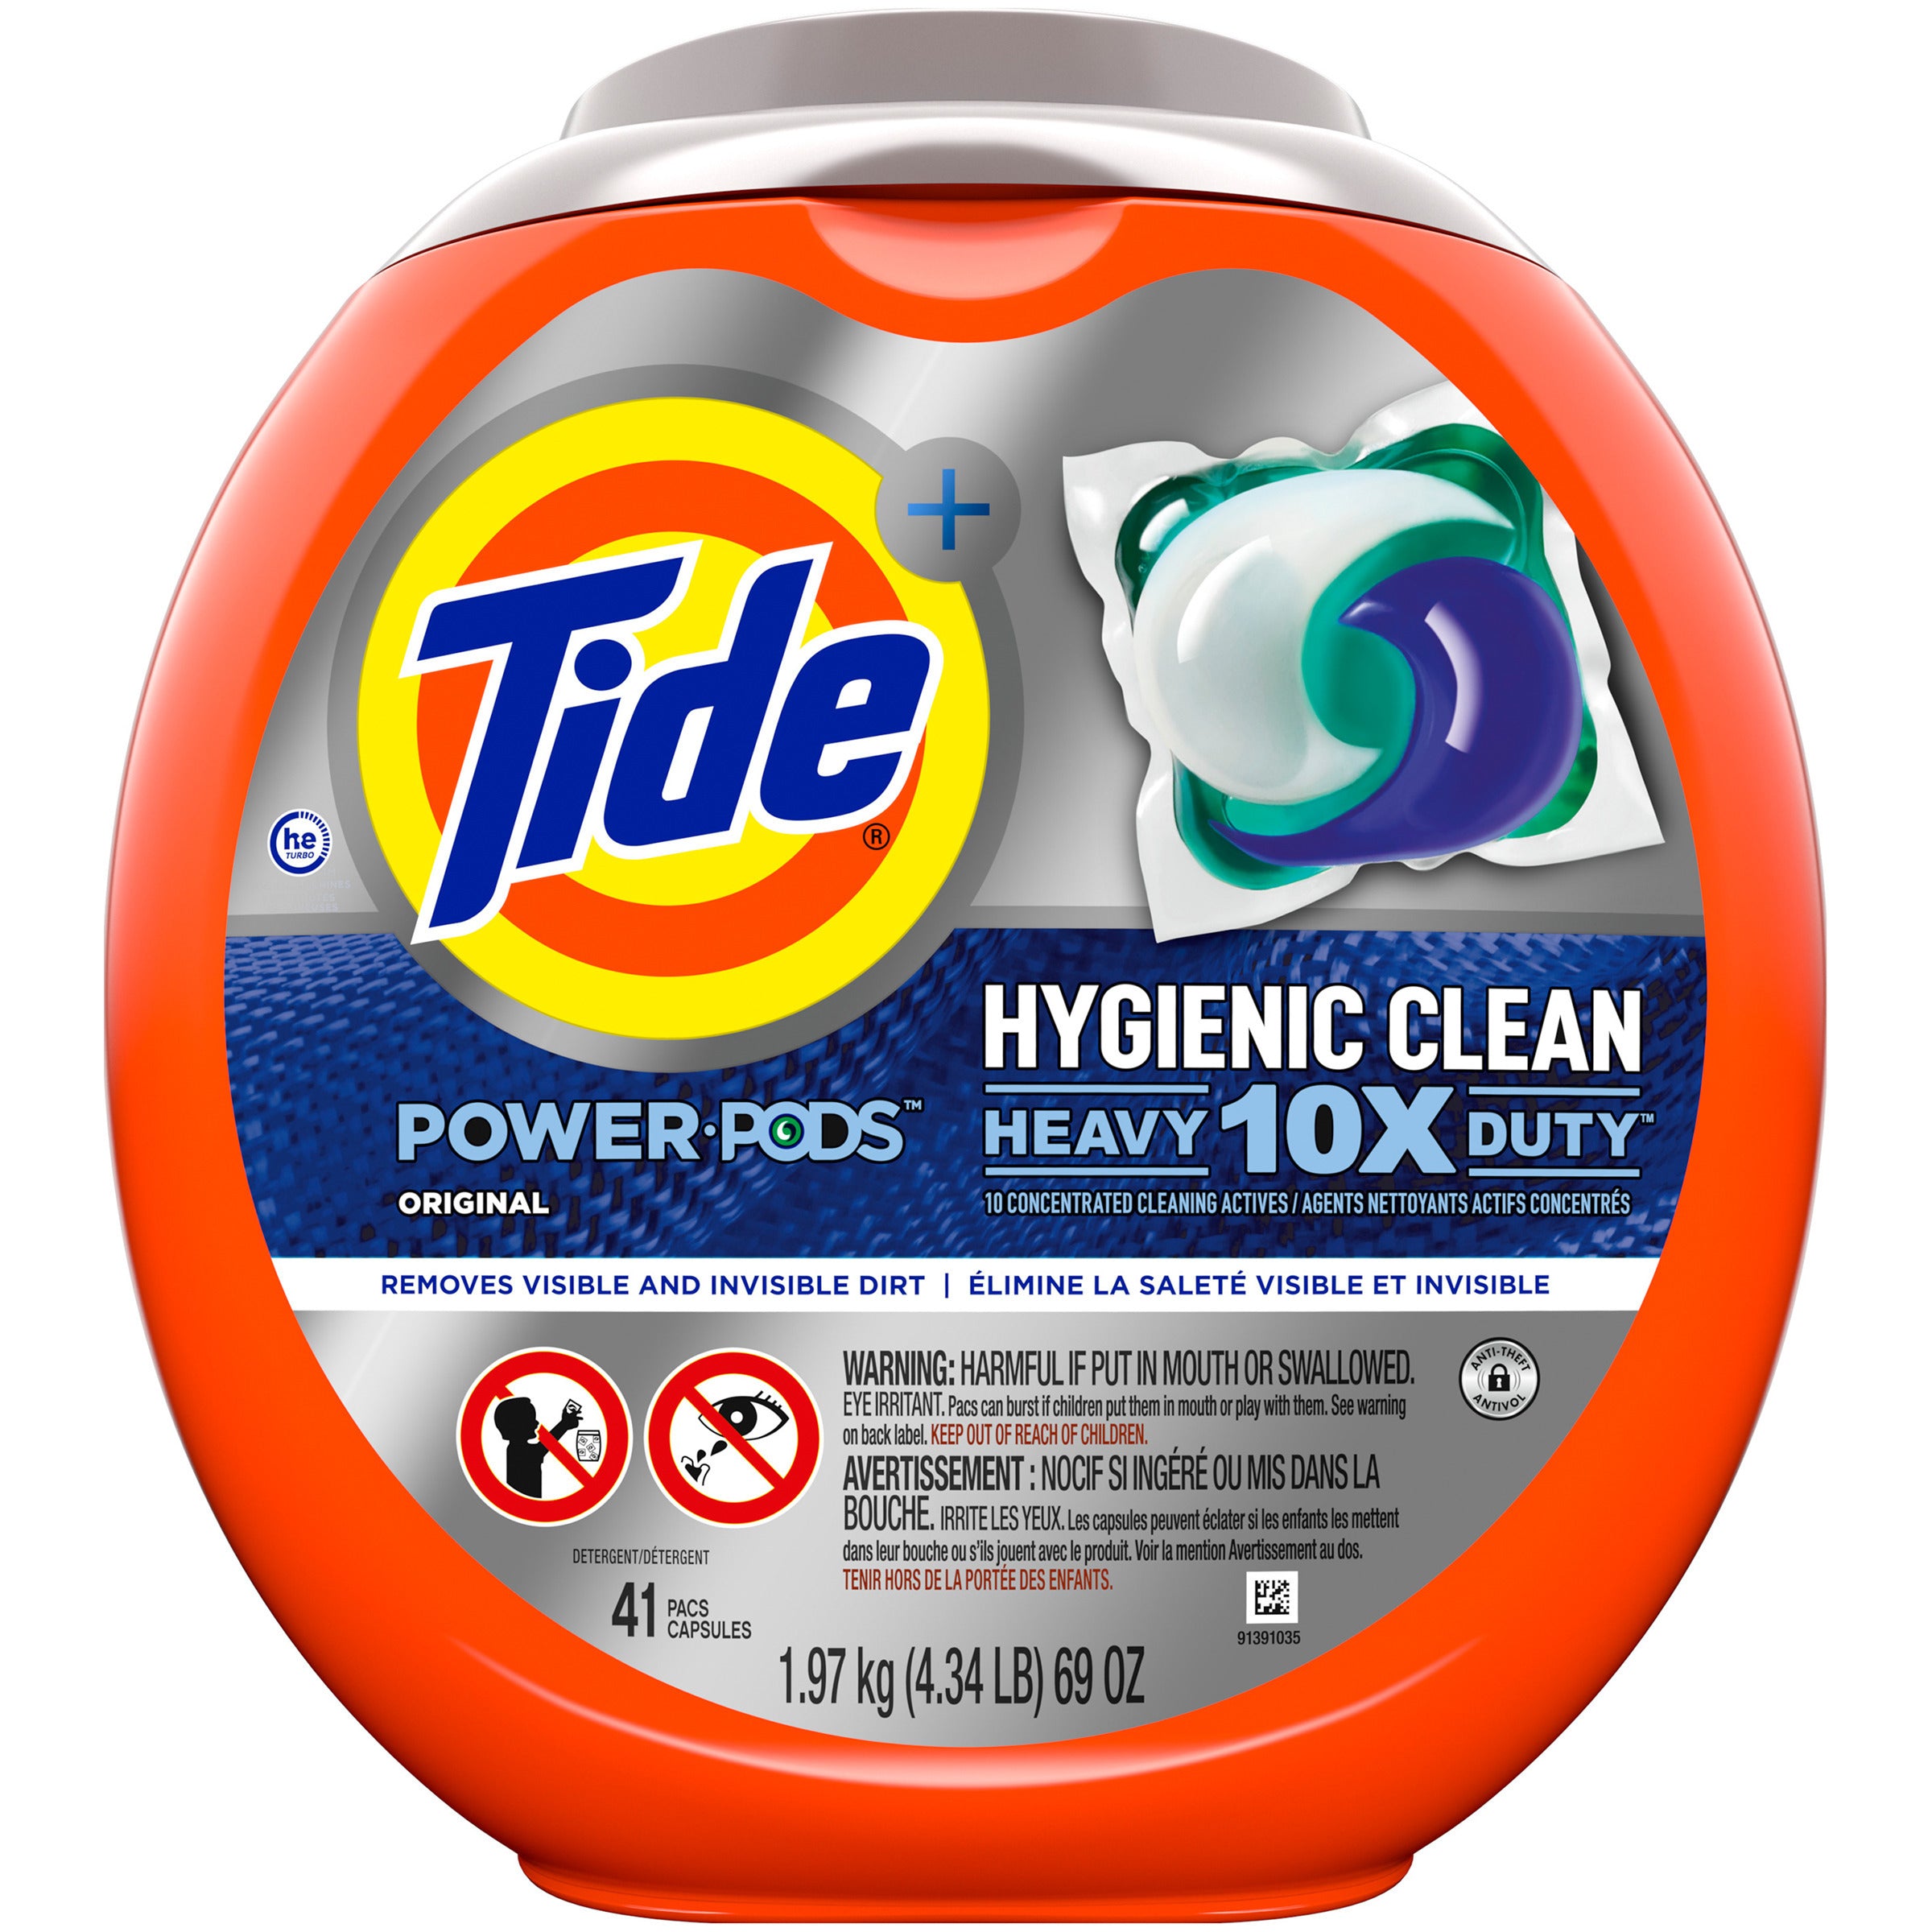 Tide Hygienic Clean Heavy 10x Duty Power PODS Liquid Laundry Detergent, Original, 45 Count